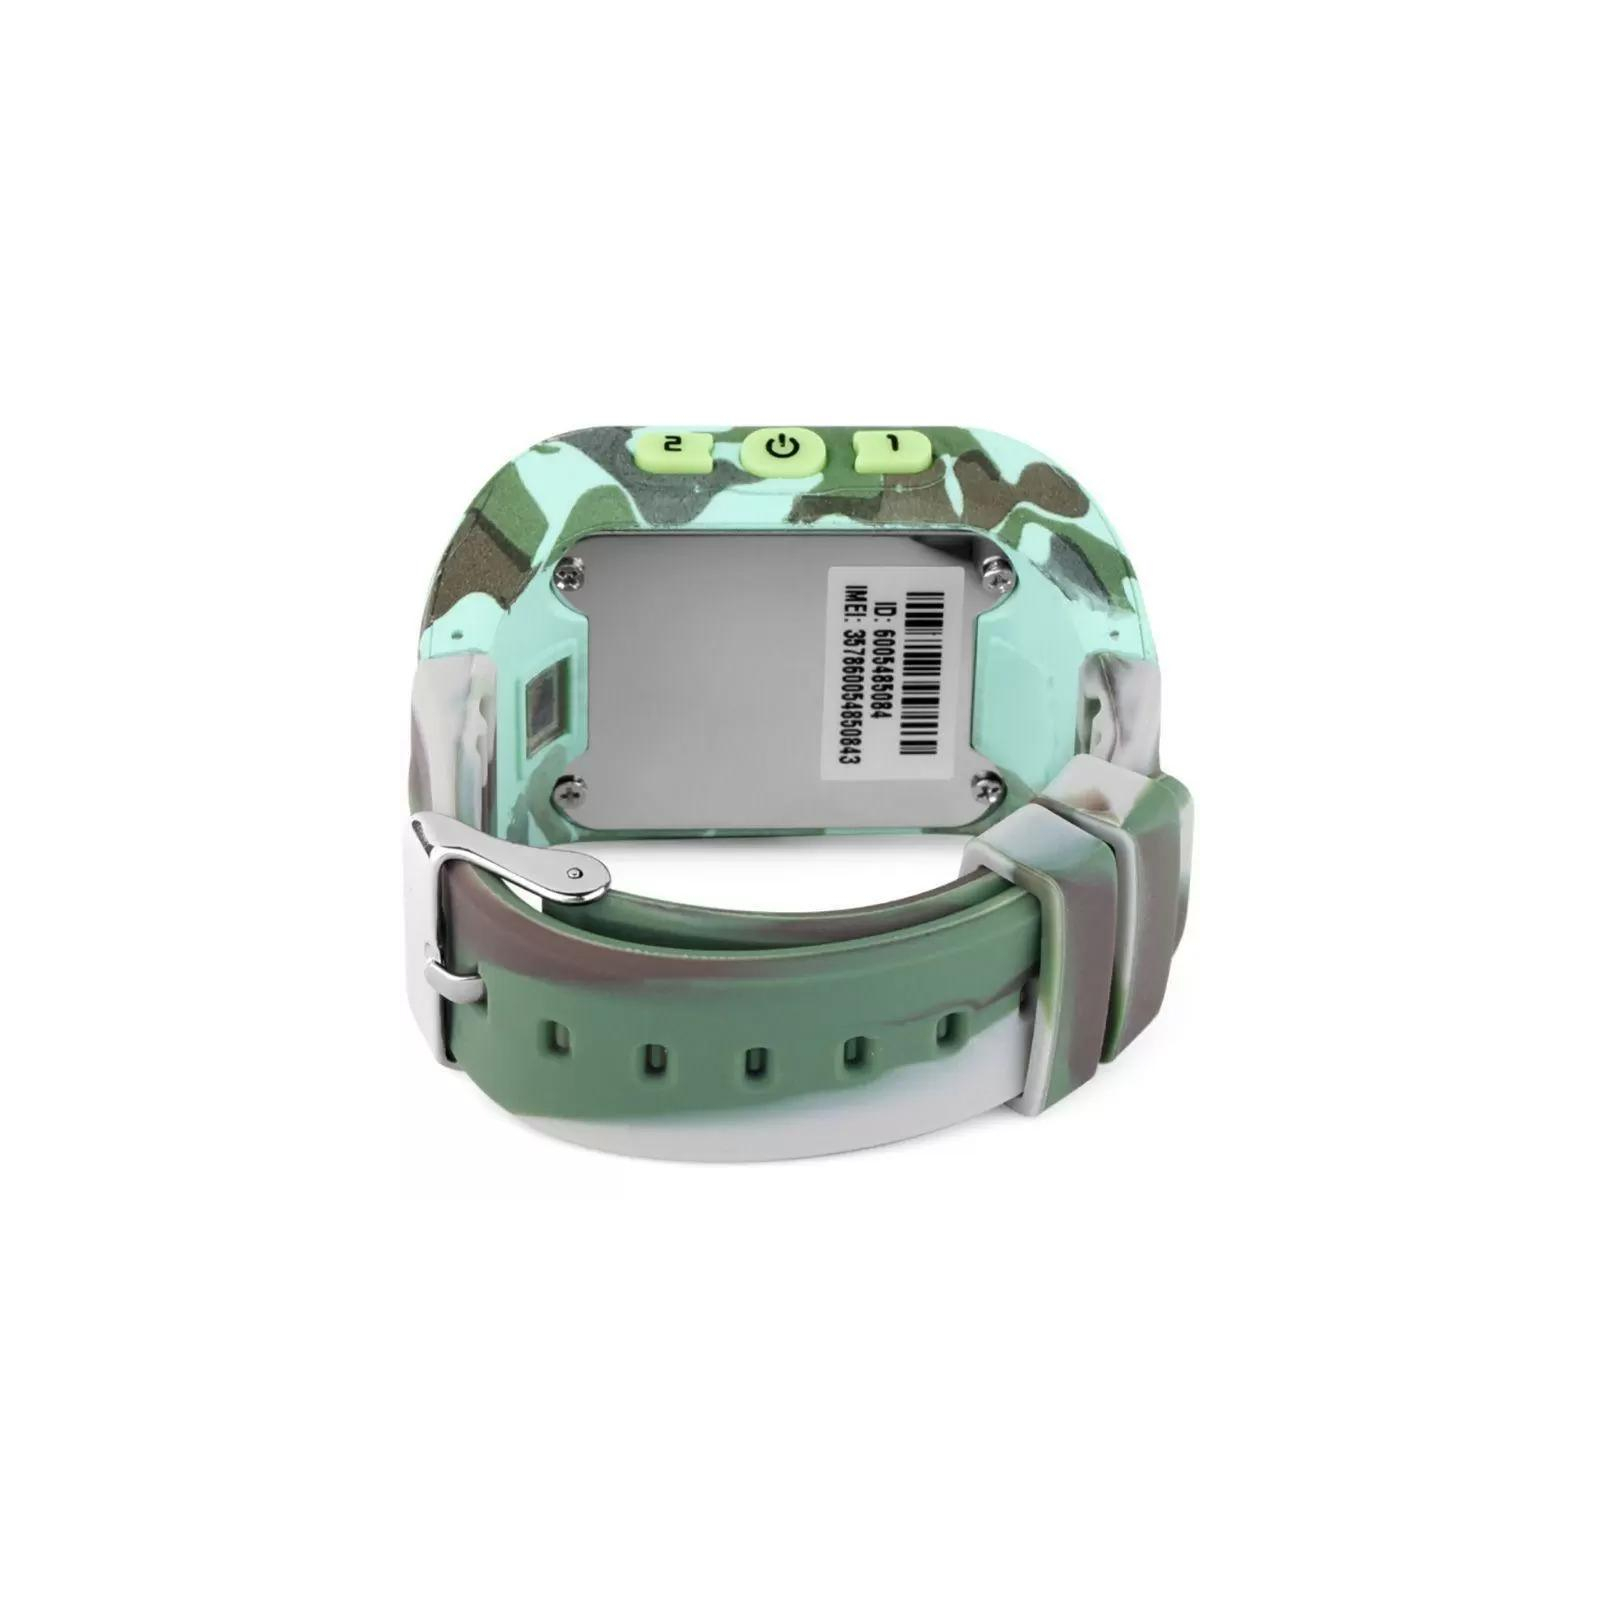 Смарт-часы UWatch Q50 Kid smart watch Pink (F_46119) изображение 3